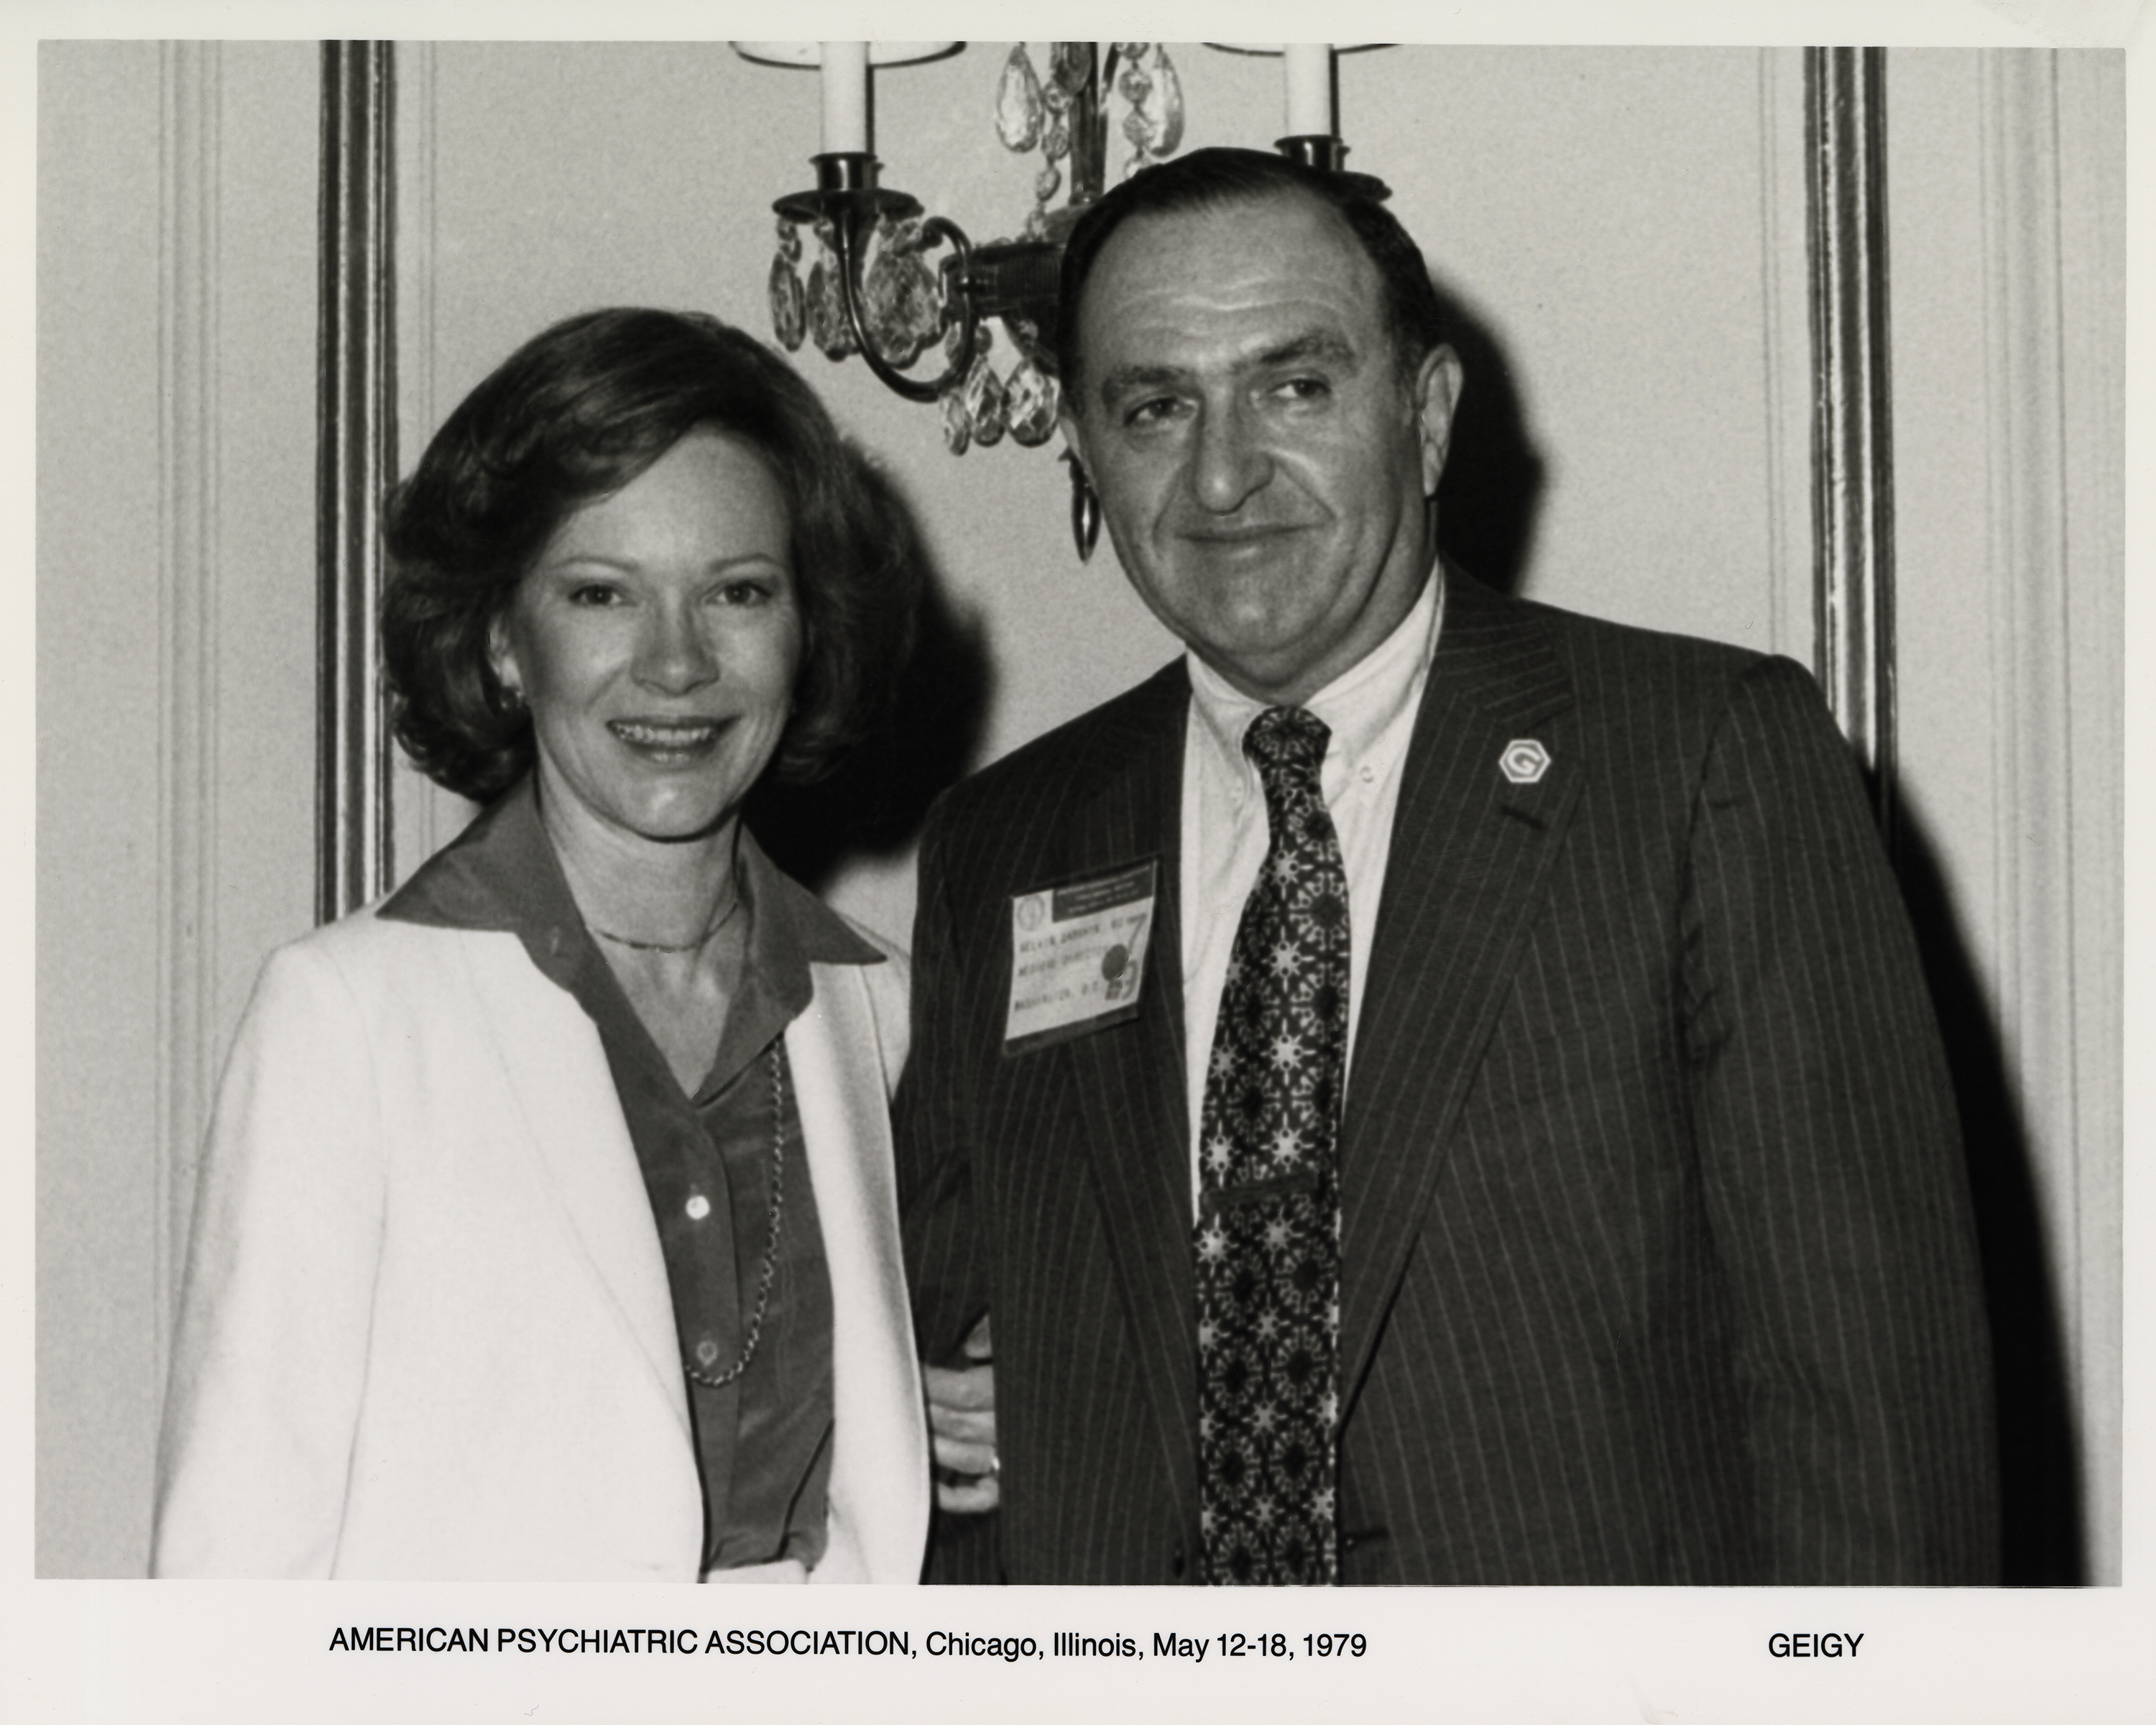 American Psychiatric Association 1979; Rosalyn Carter and Melvin Sabshin